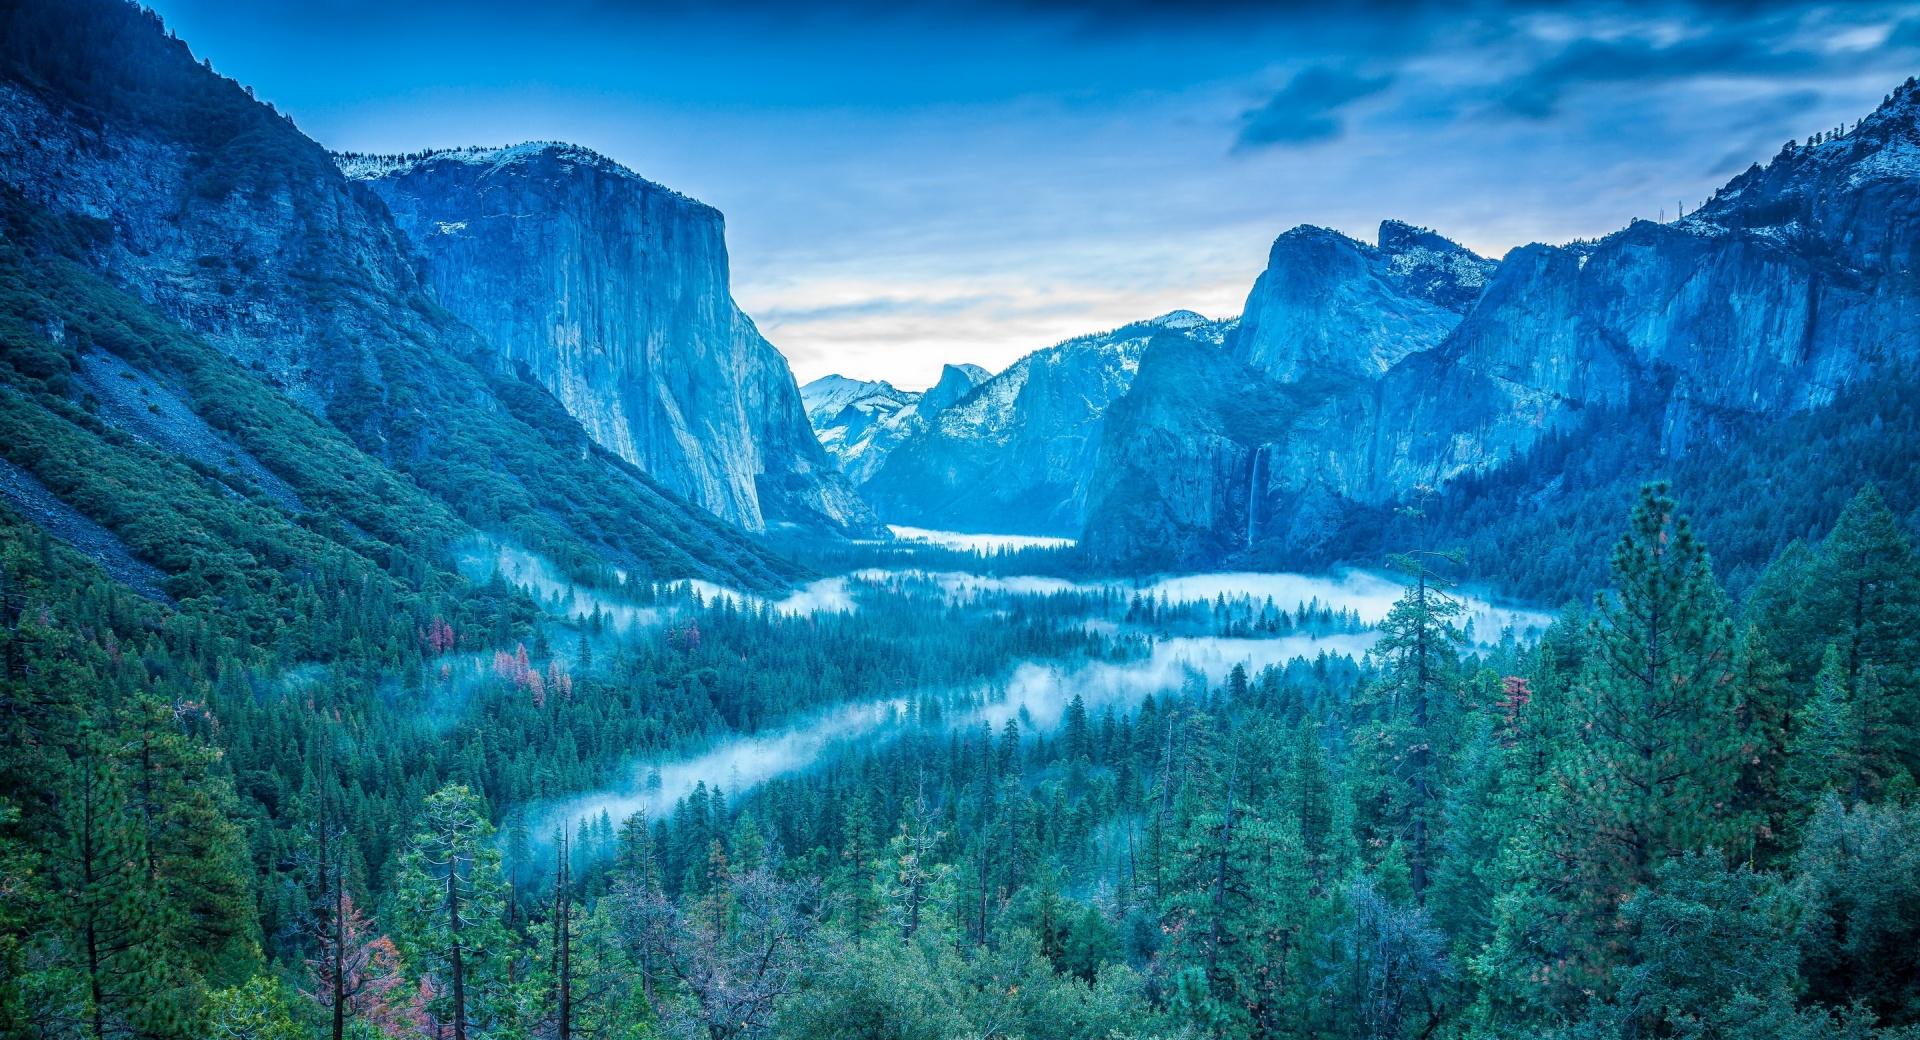 Yosemite National Park California USA Fog at 1024 x 1024 iPad size wallpapers HD quality